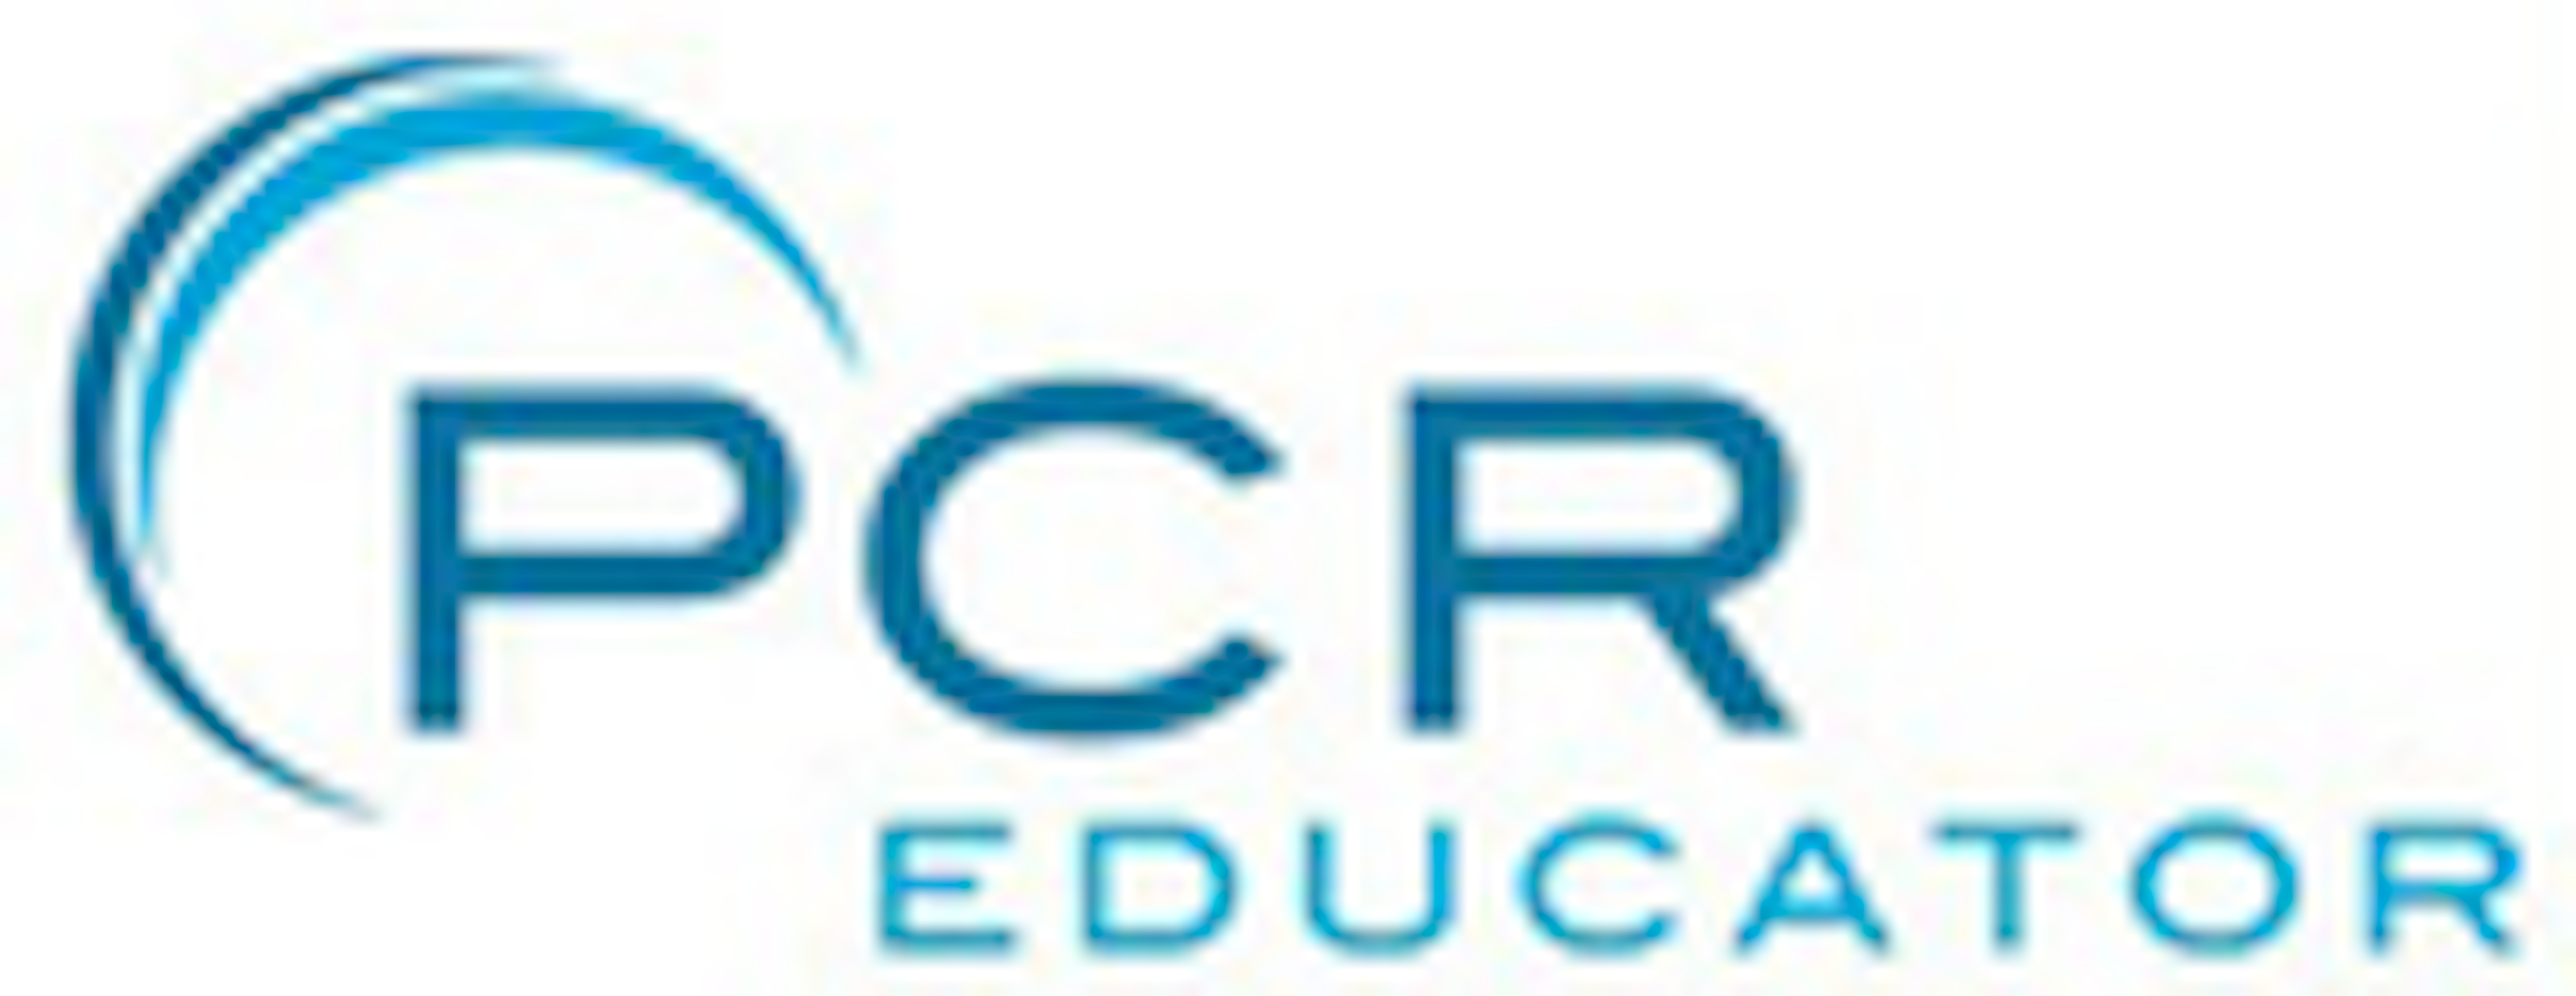 PCR Educator Logo